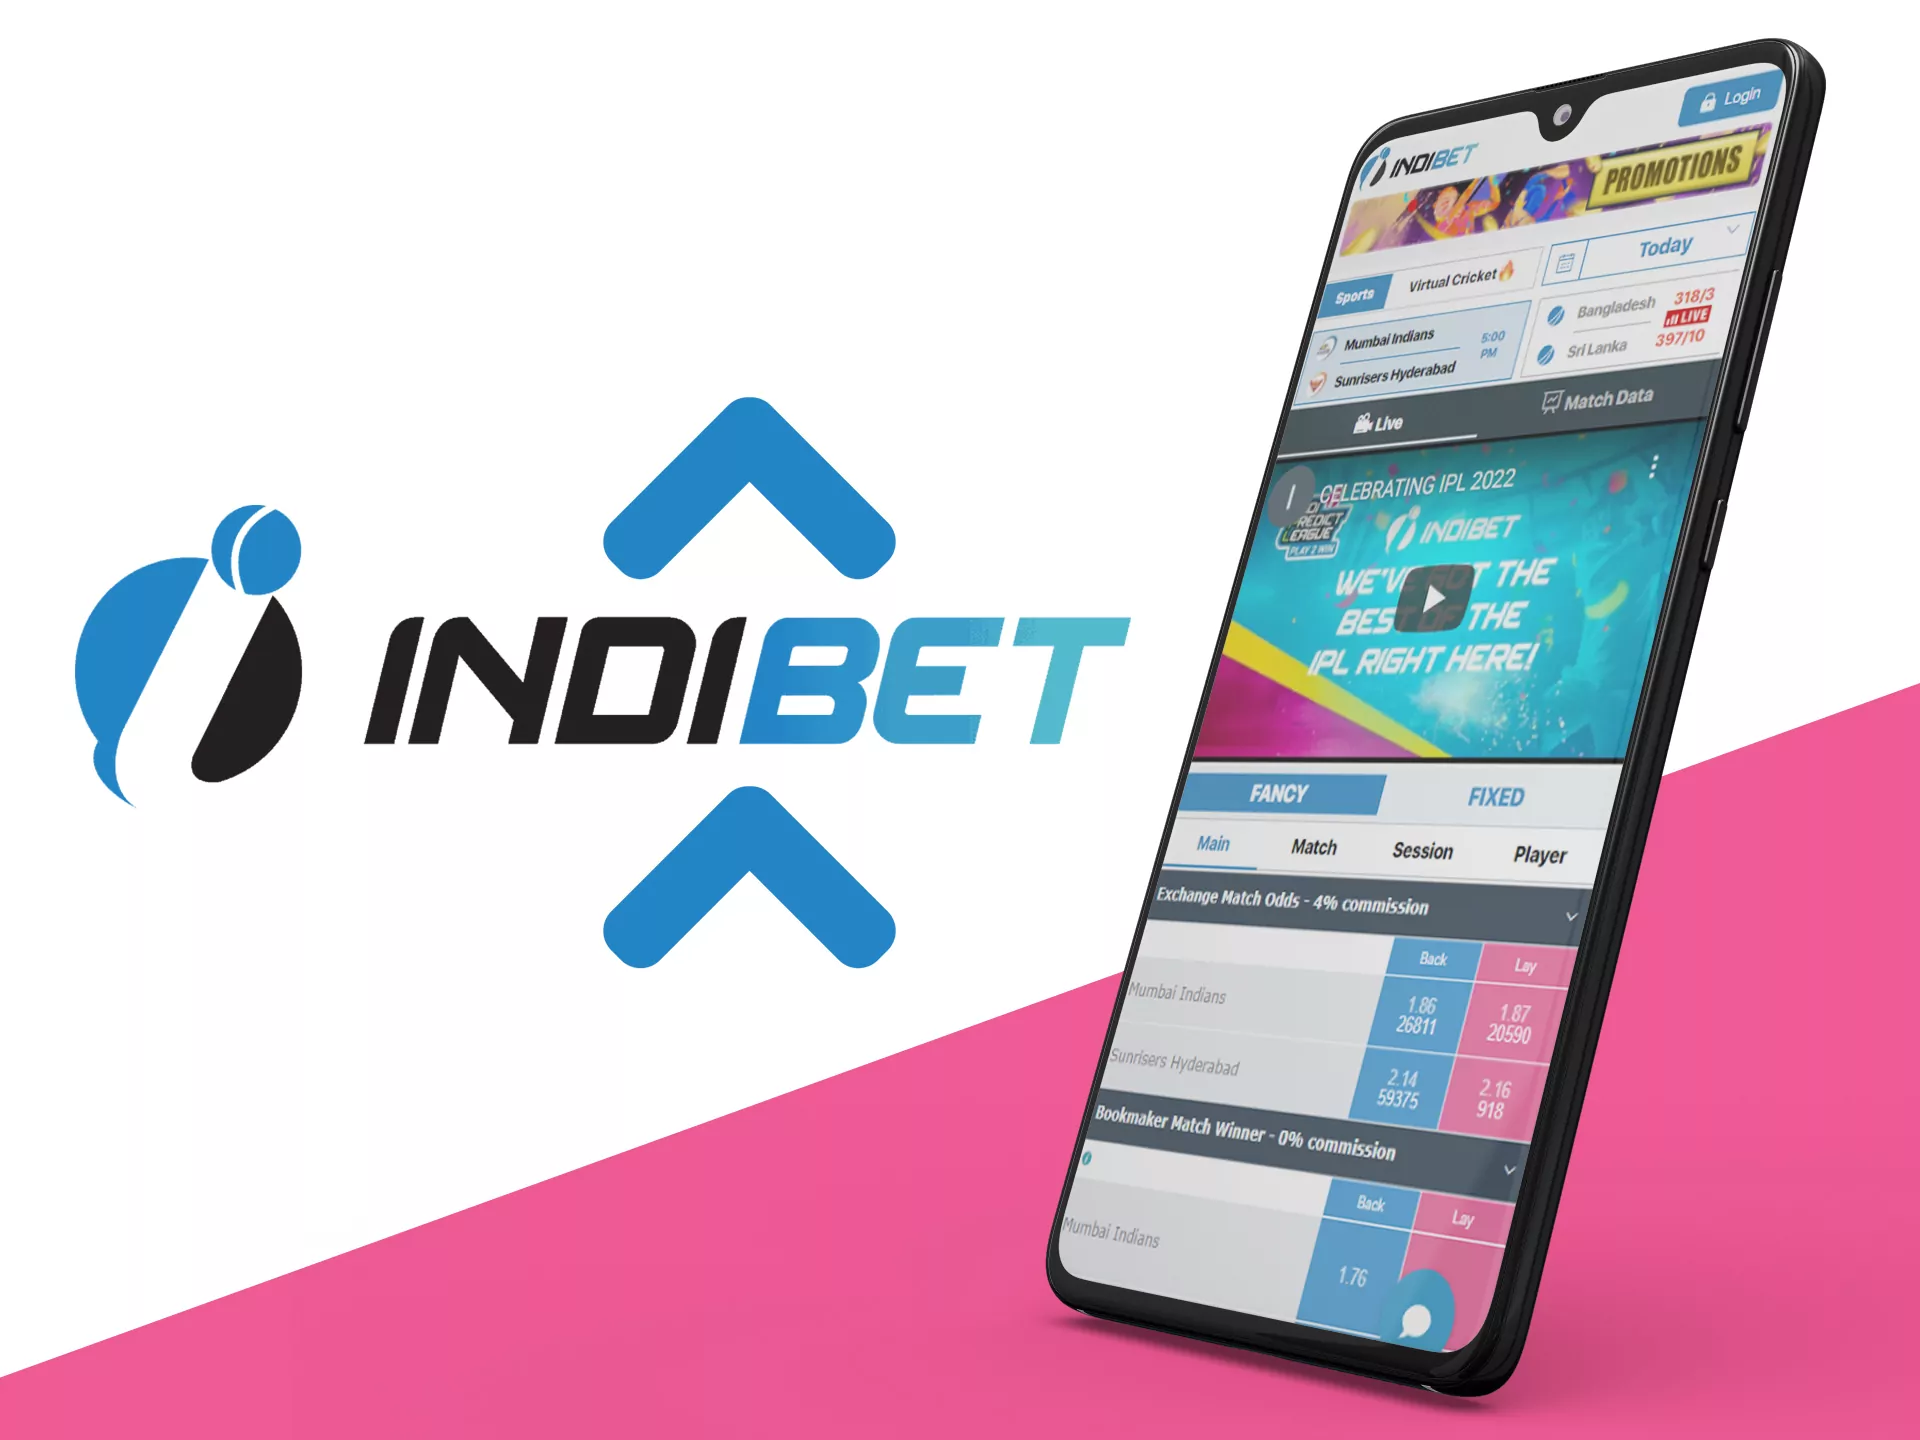 Update your Indibet app to actualize it.